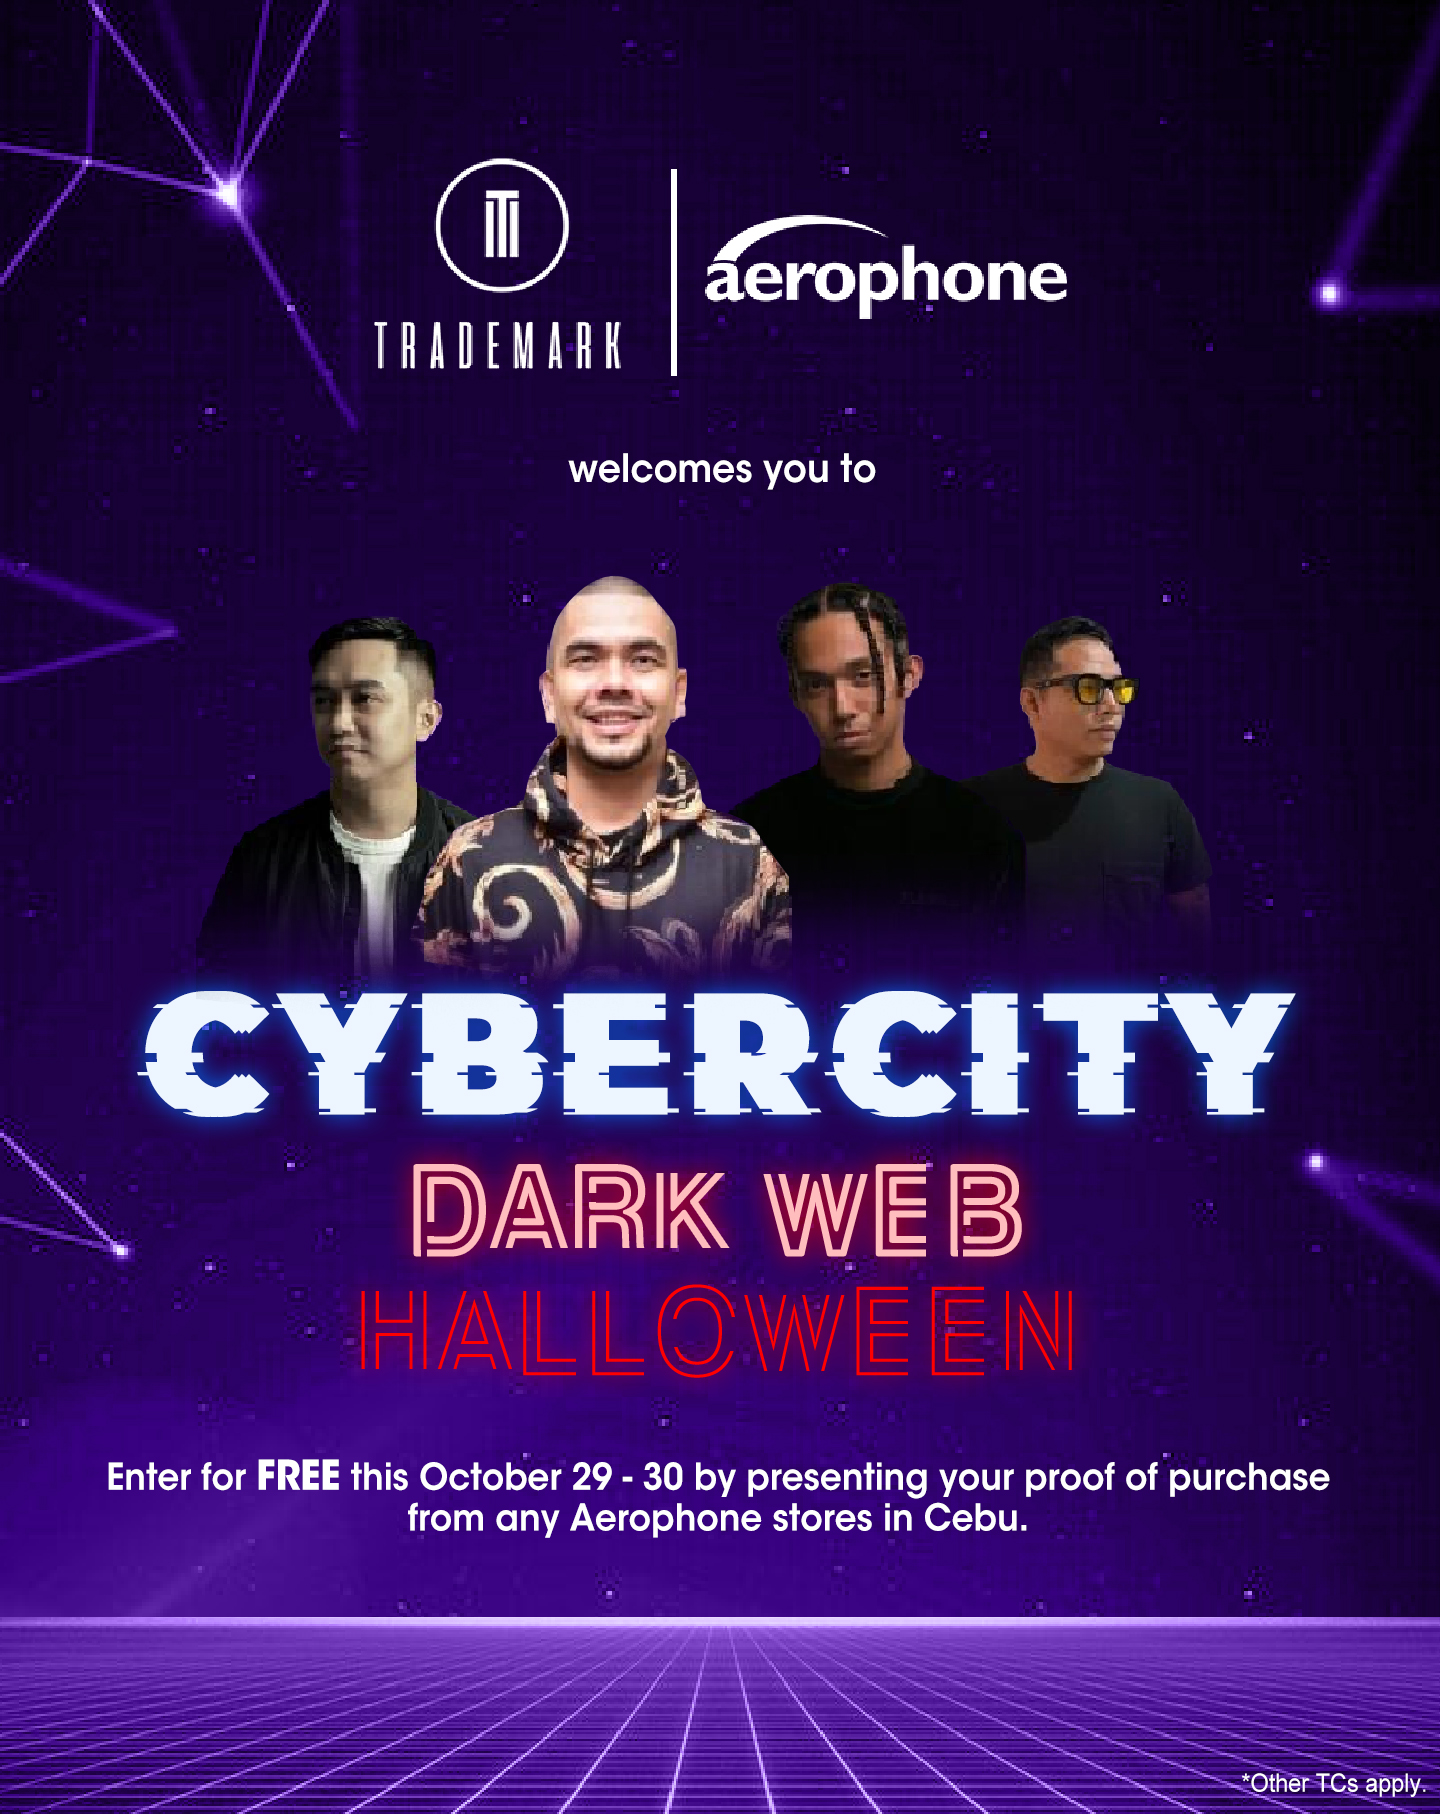 Cyber City Dark Web Halloween 2022 